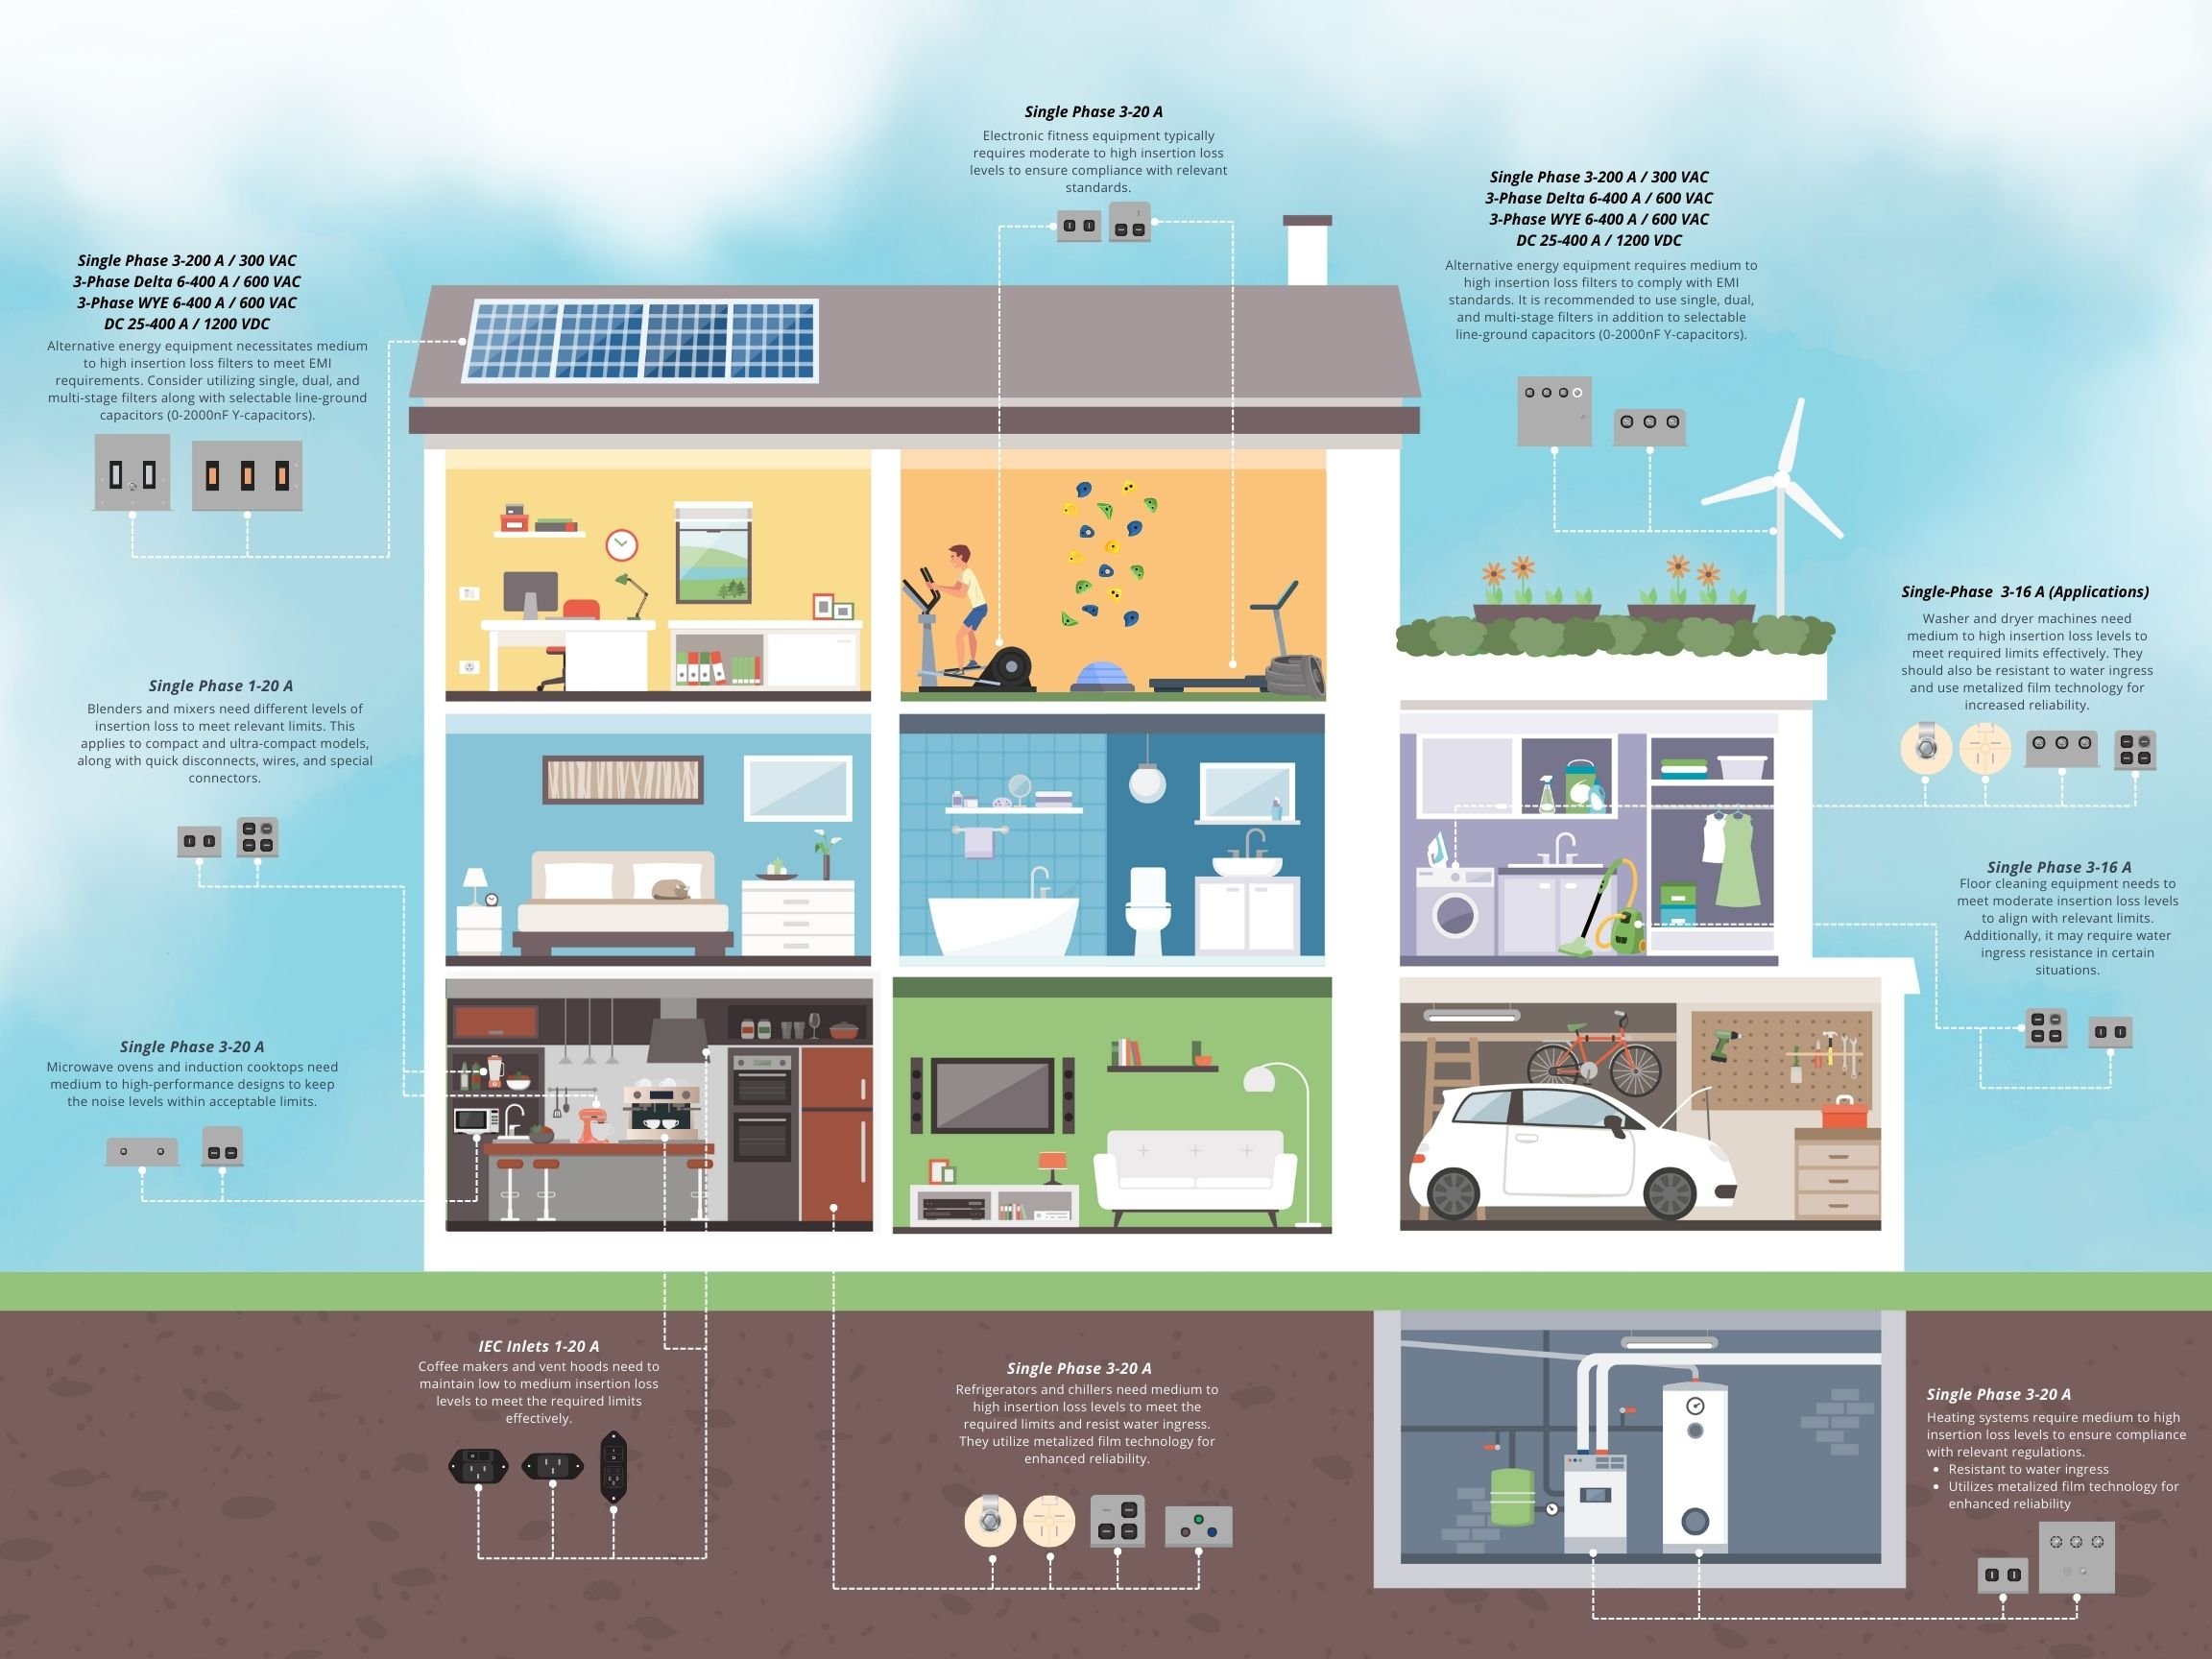 Professional Grade Appliances EMIEMC Infographic (24 x 18 in) (1)